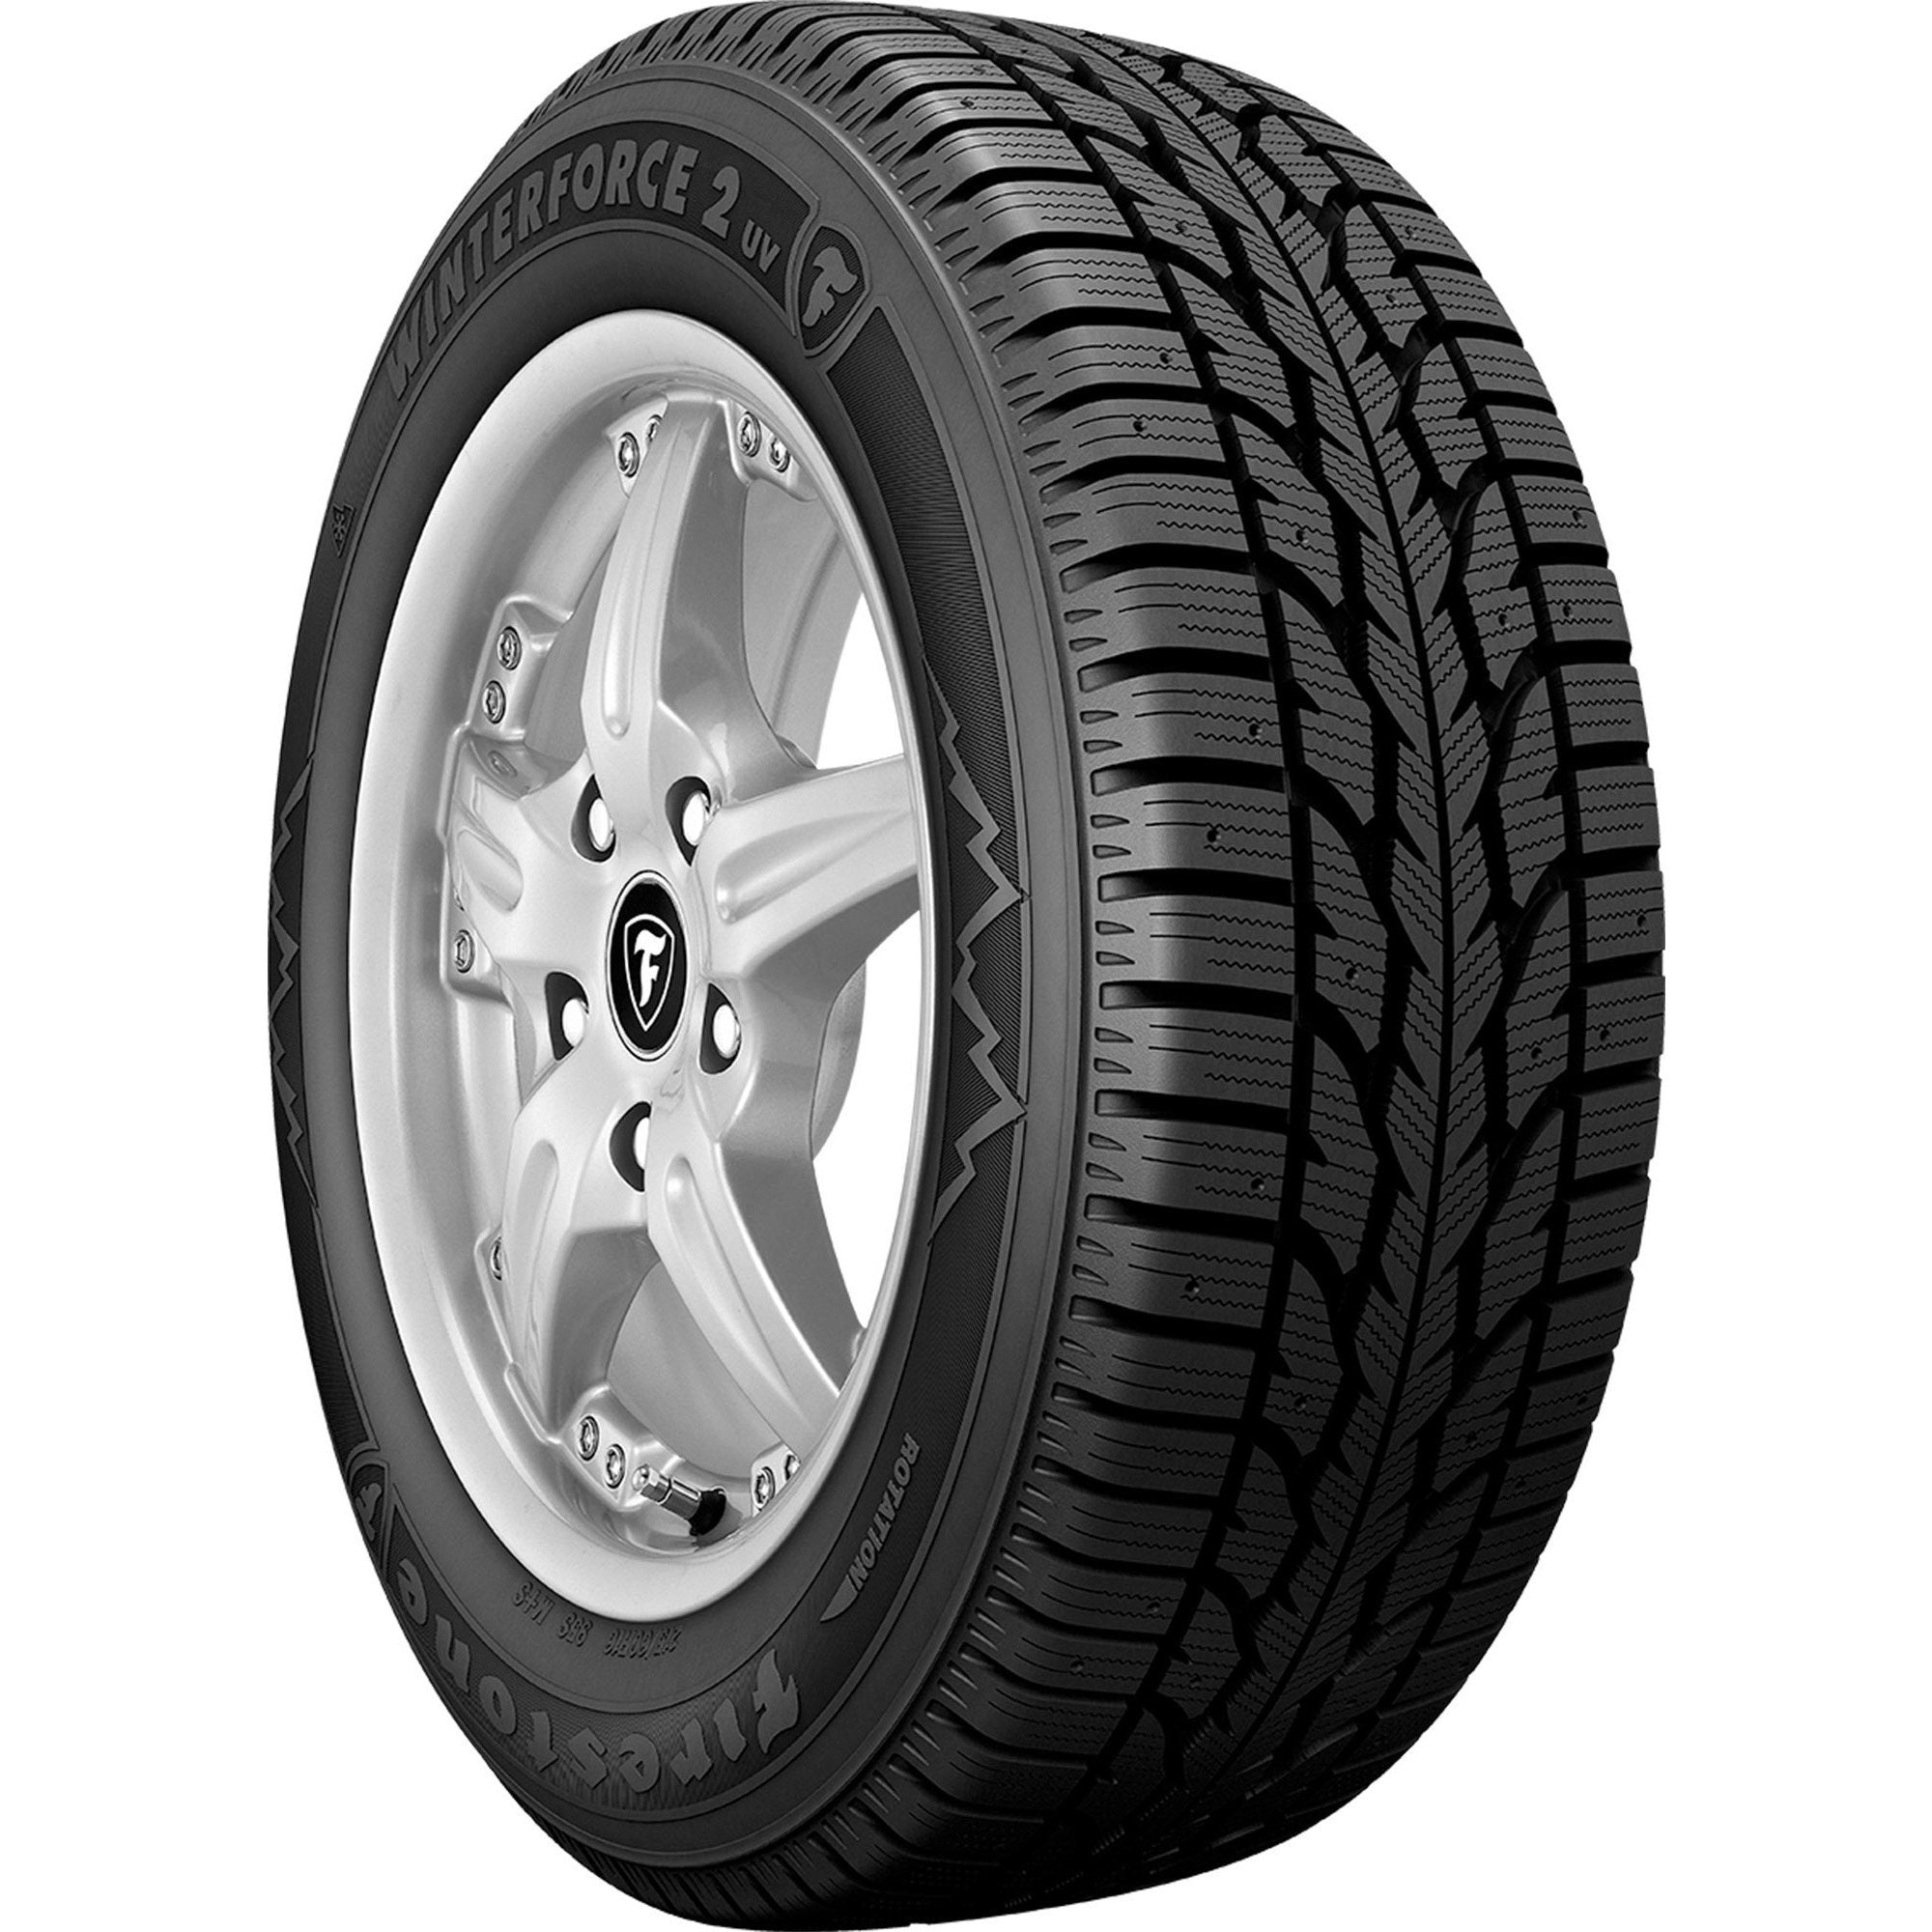 FIRESTONE WINTERFORCE2 UV 215/60R17 (27.2X8.5R 17) Tires